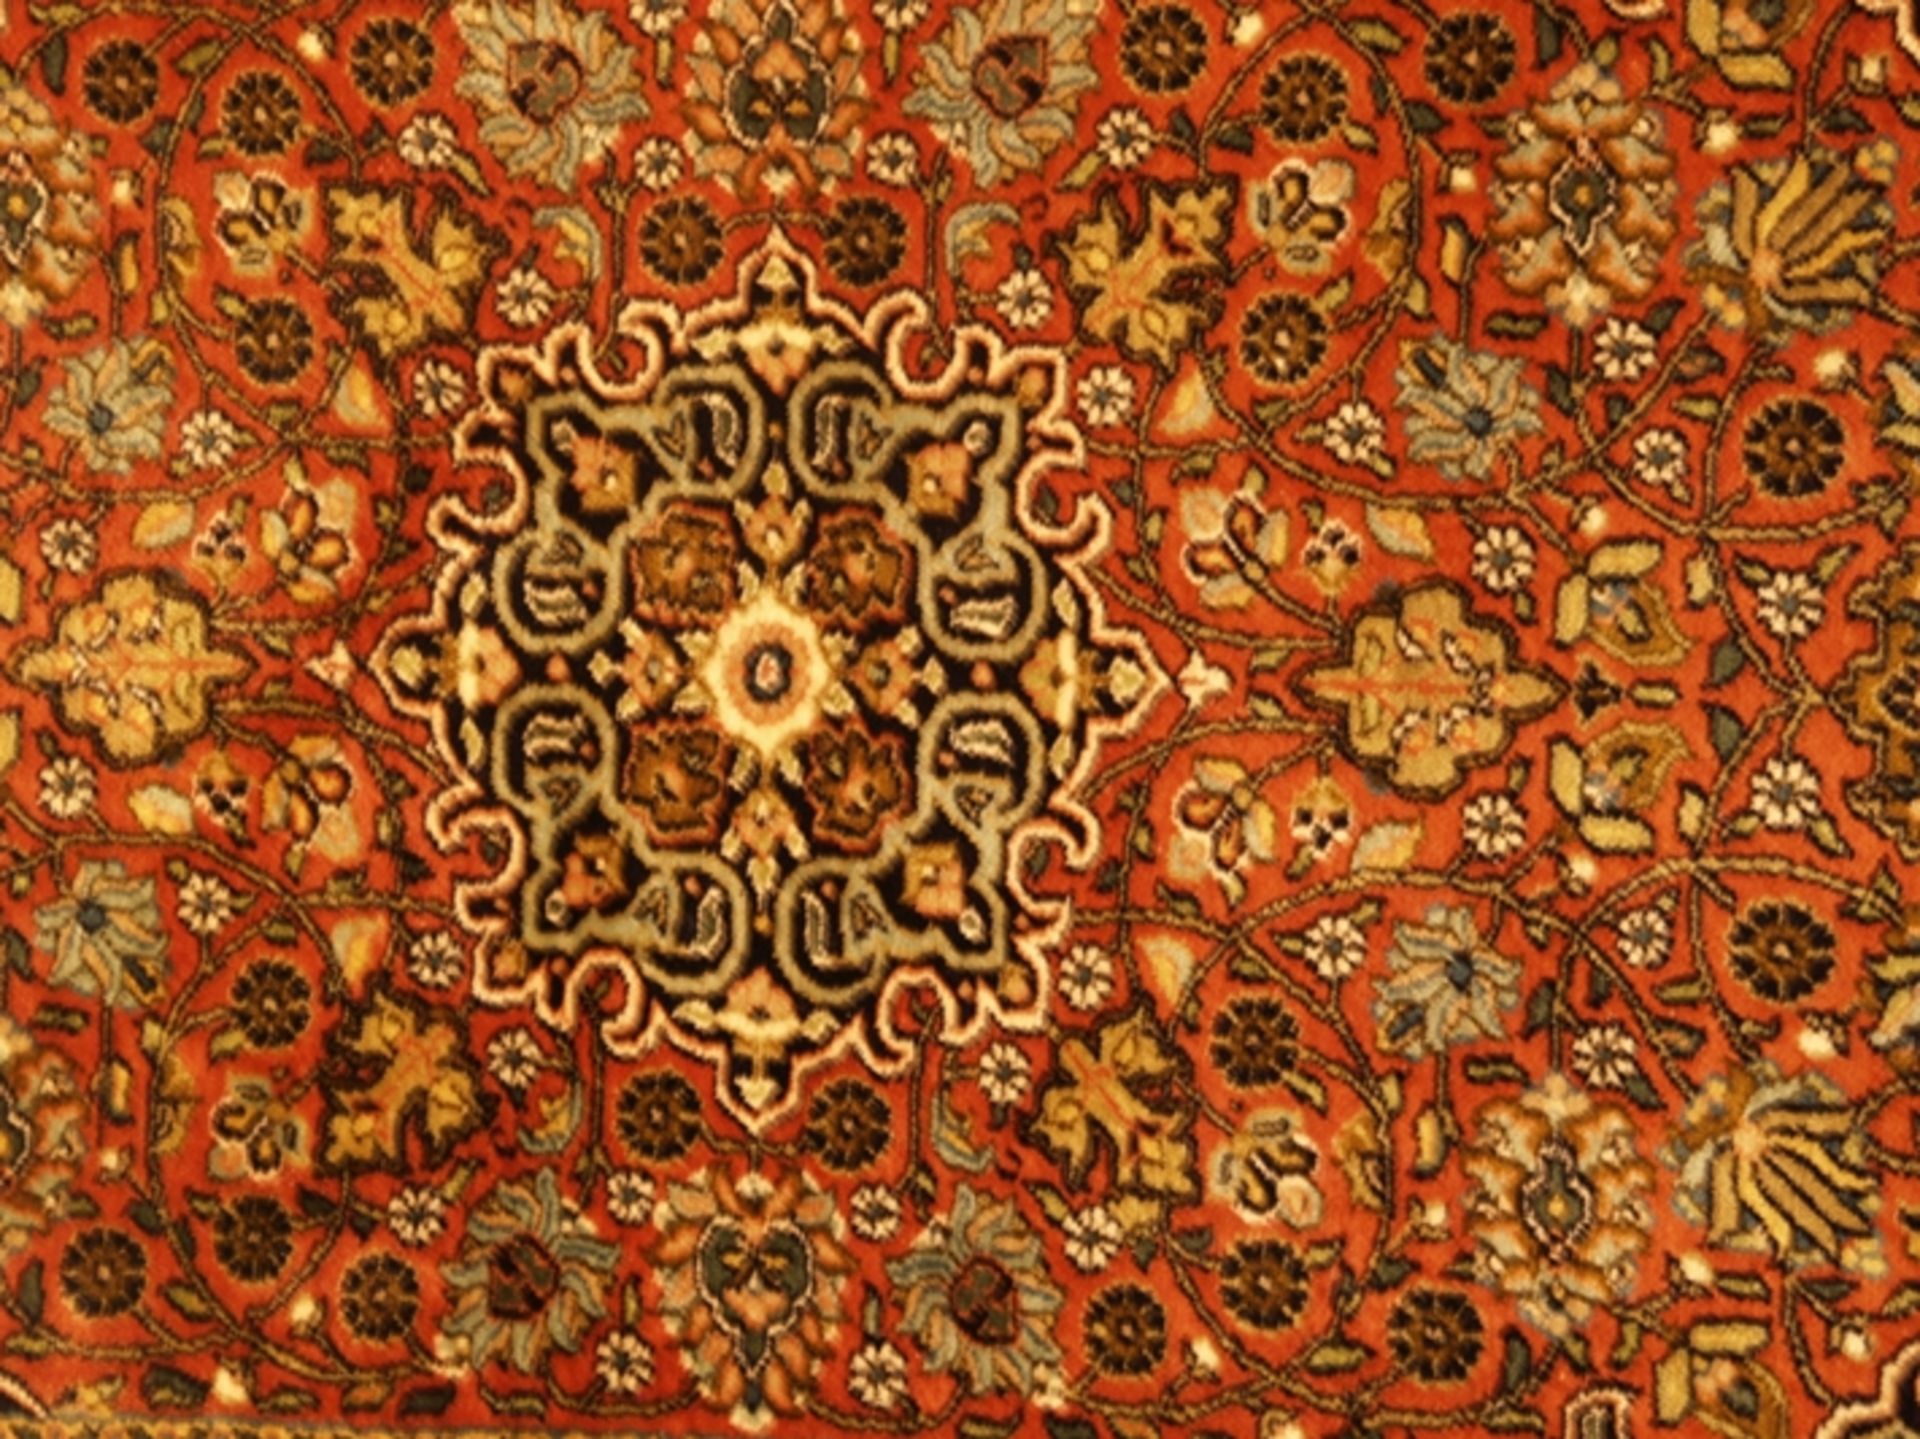 Orientteppich - Kaschmir-Seide auf Wolle, handgeknüpft, Medaillon ziegelfarbig, florales Muster,c a - Image 2 of 4